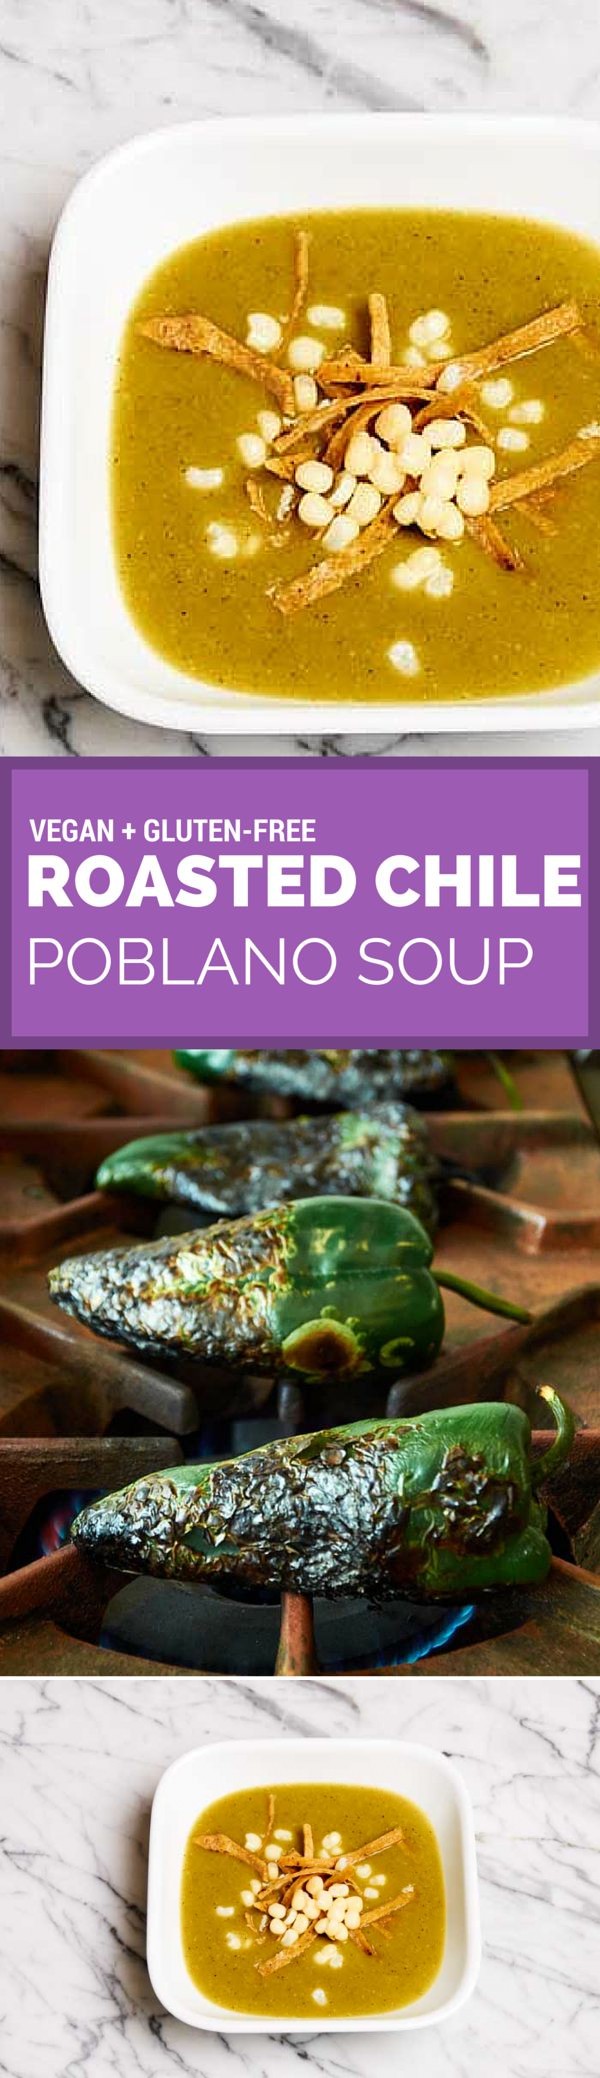 Roasted Chile Poblano Soup - Vegan